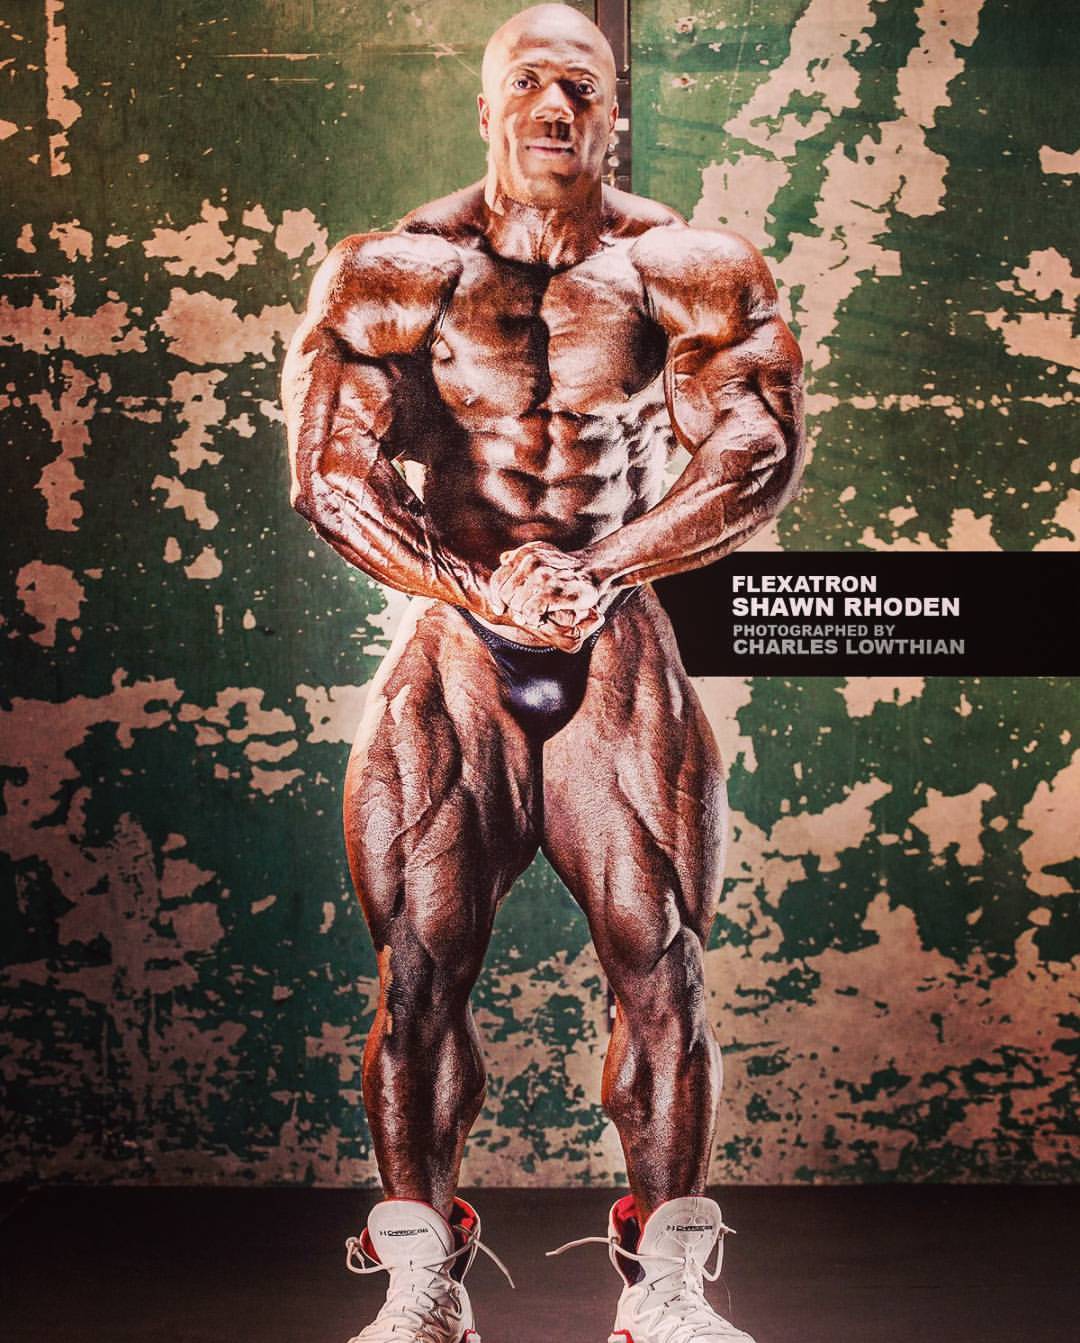 Mr Olympia Competitor, Shawn “Flexatron” Rhoden Motivation